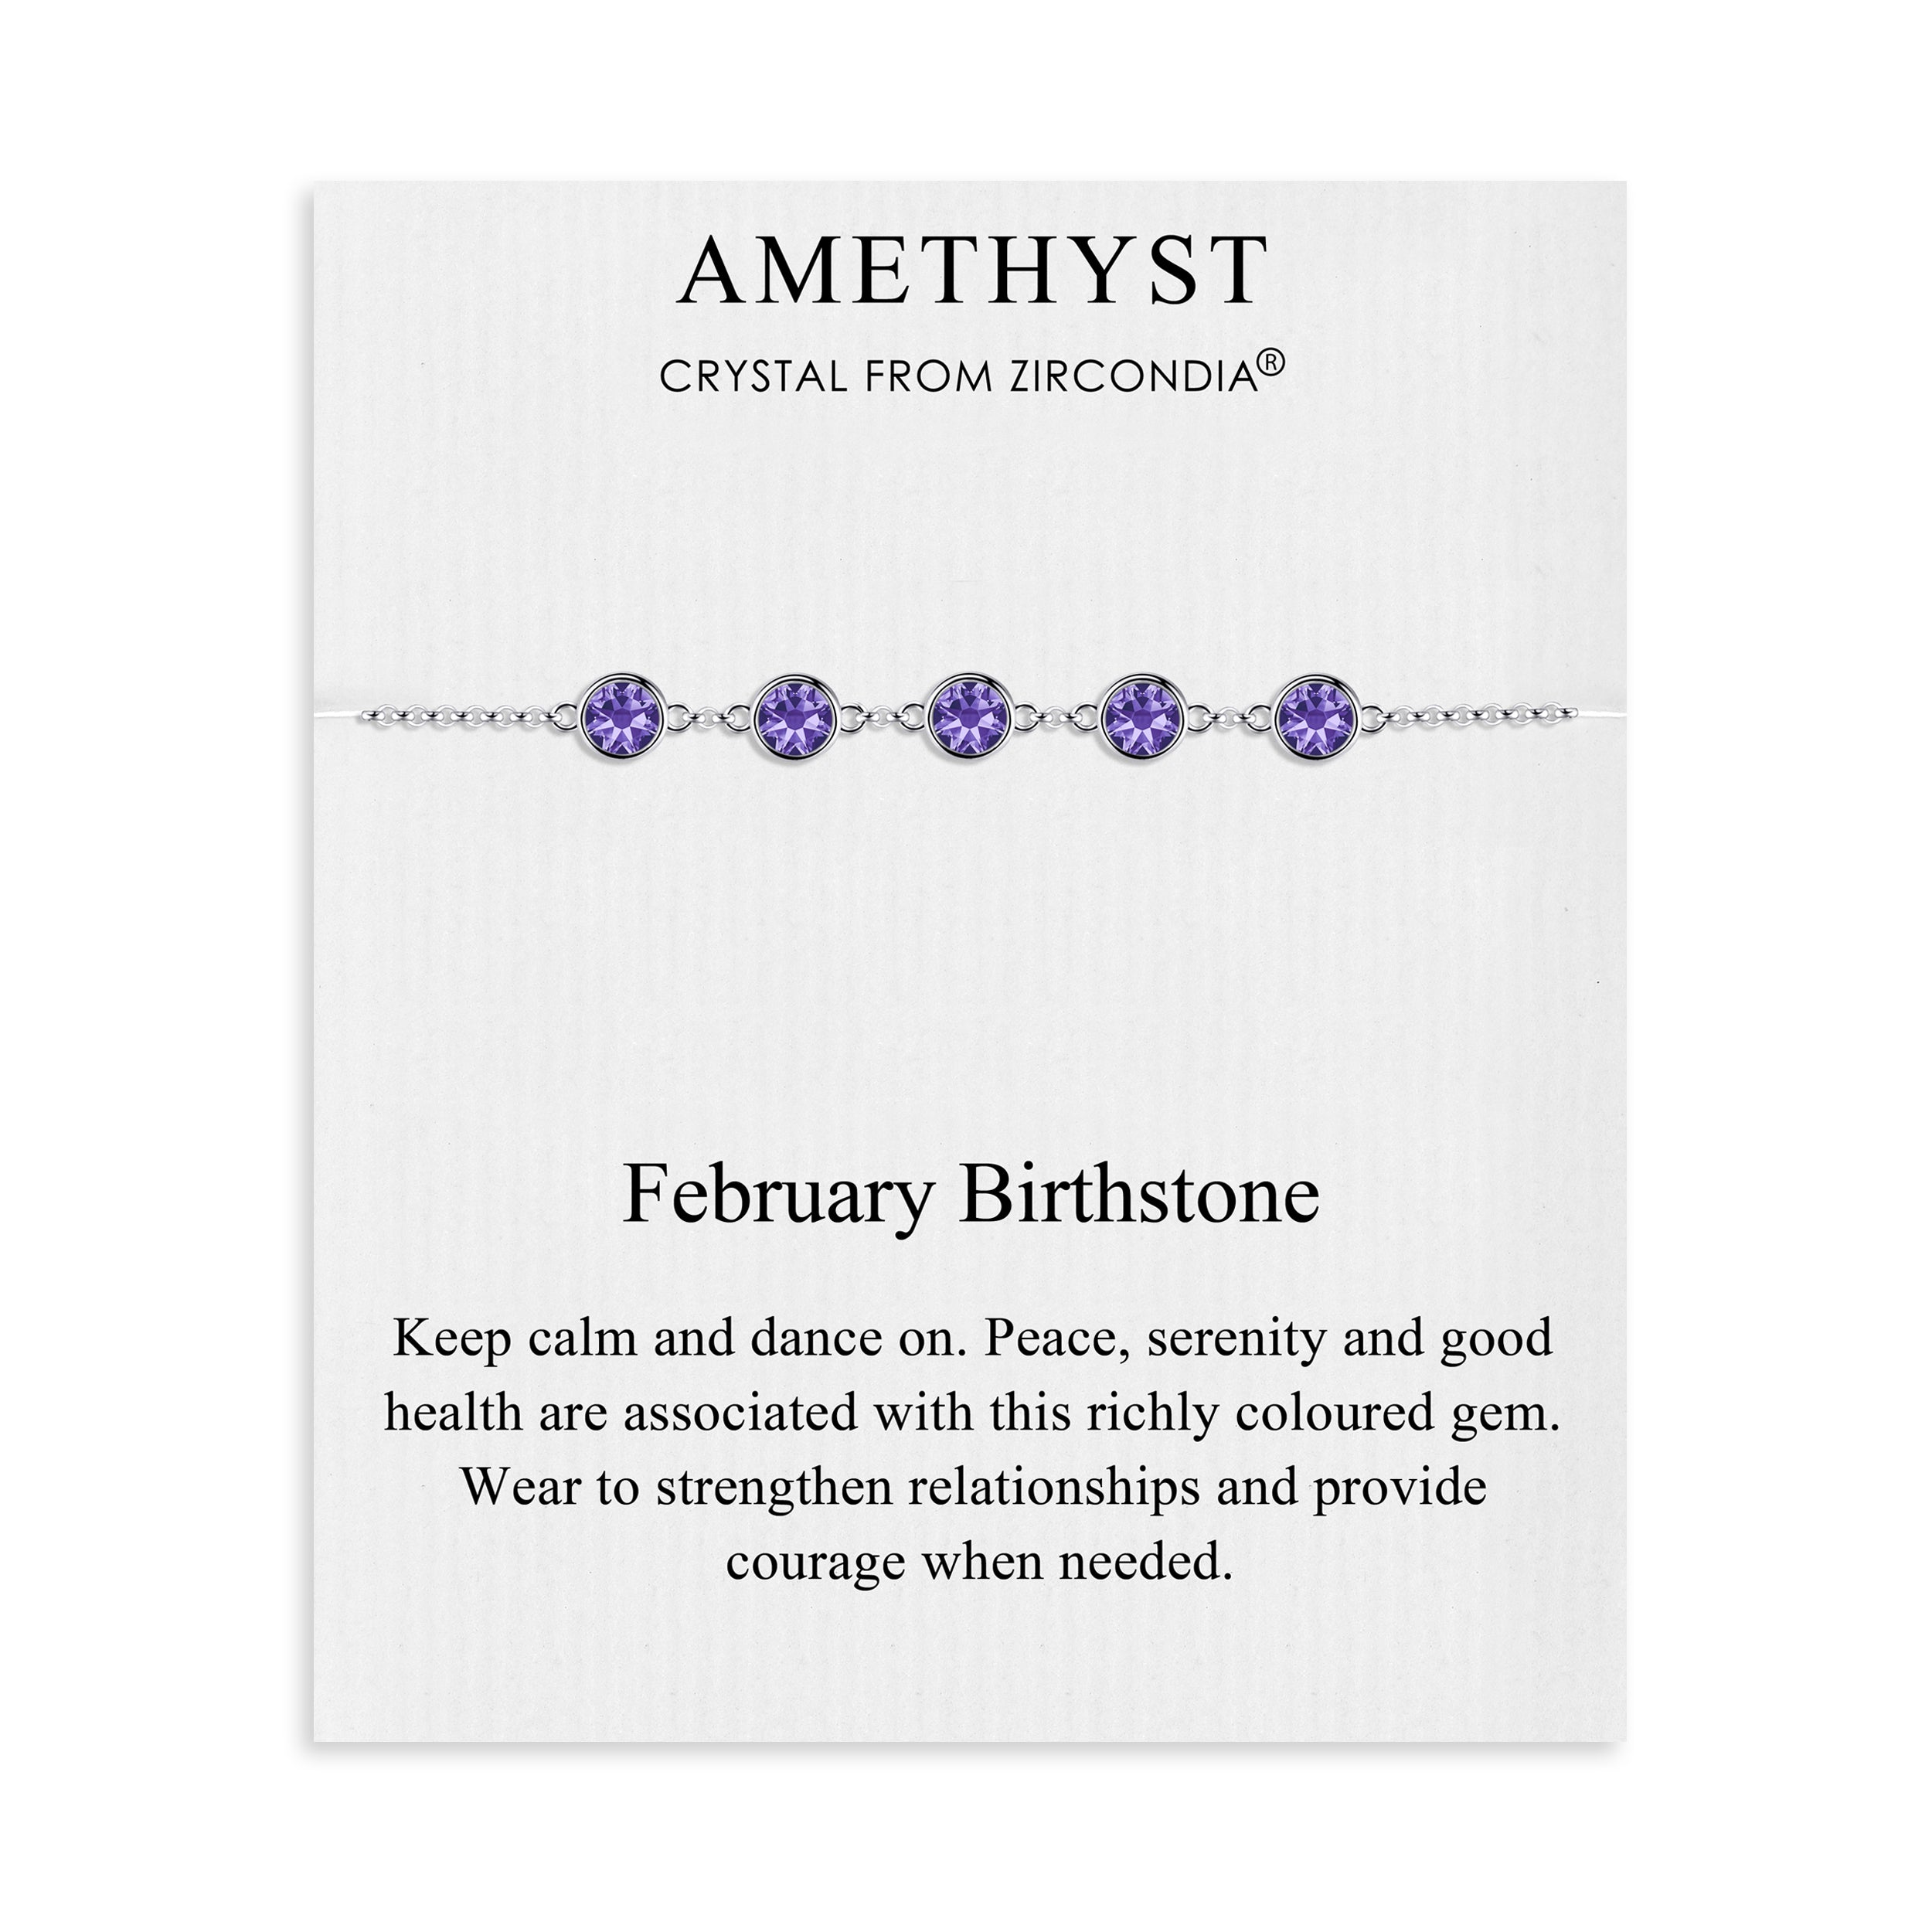 February Birthstone Bracelet Created with Amethyst Zircondia® Crystals by Philip Jones Jewellery